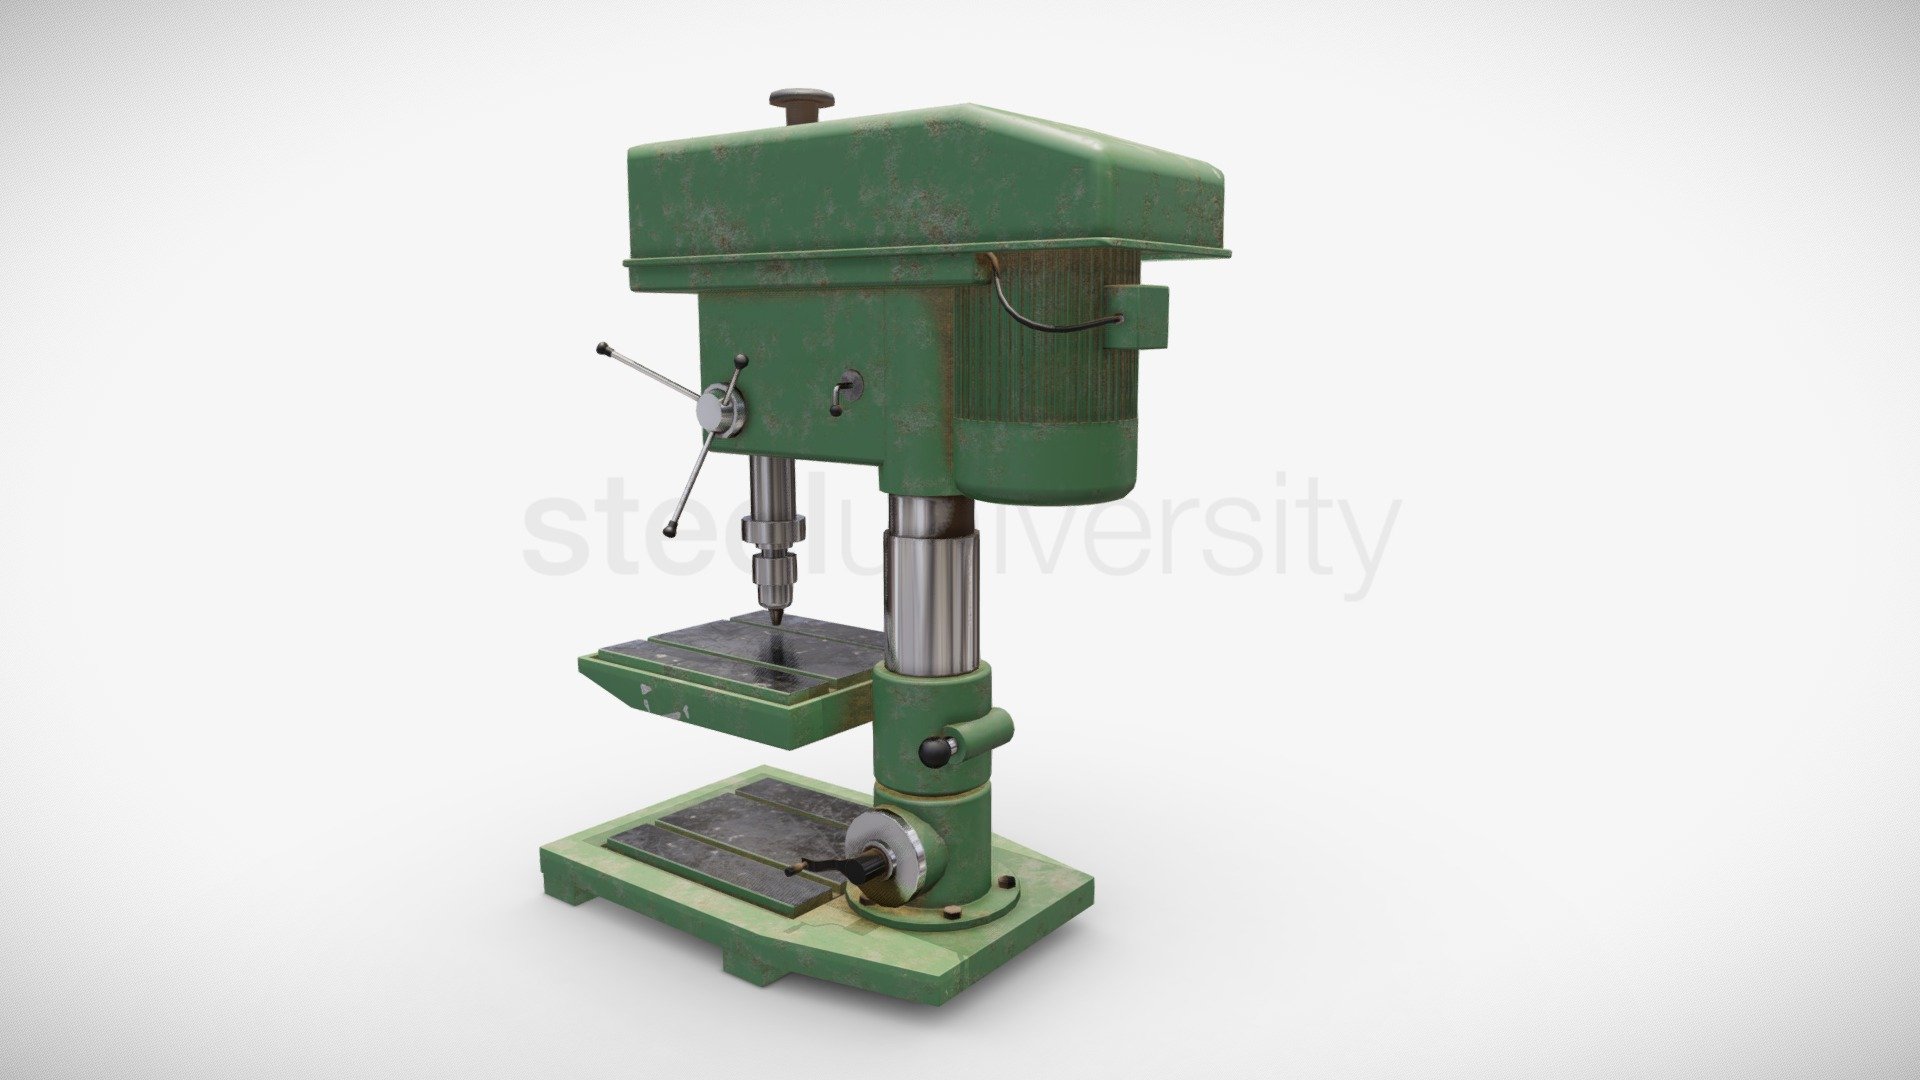 PR0464 Brench Drilling Machine - 3D model by steeluniversity 3d model